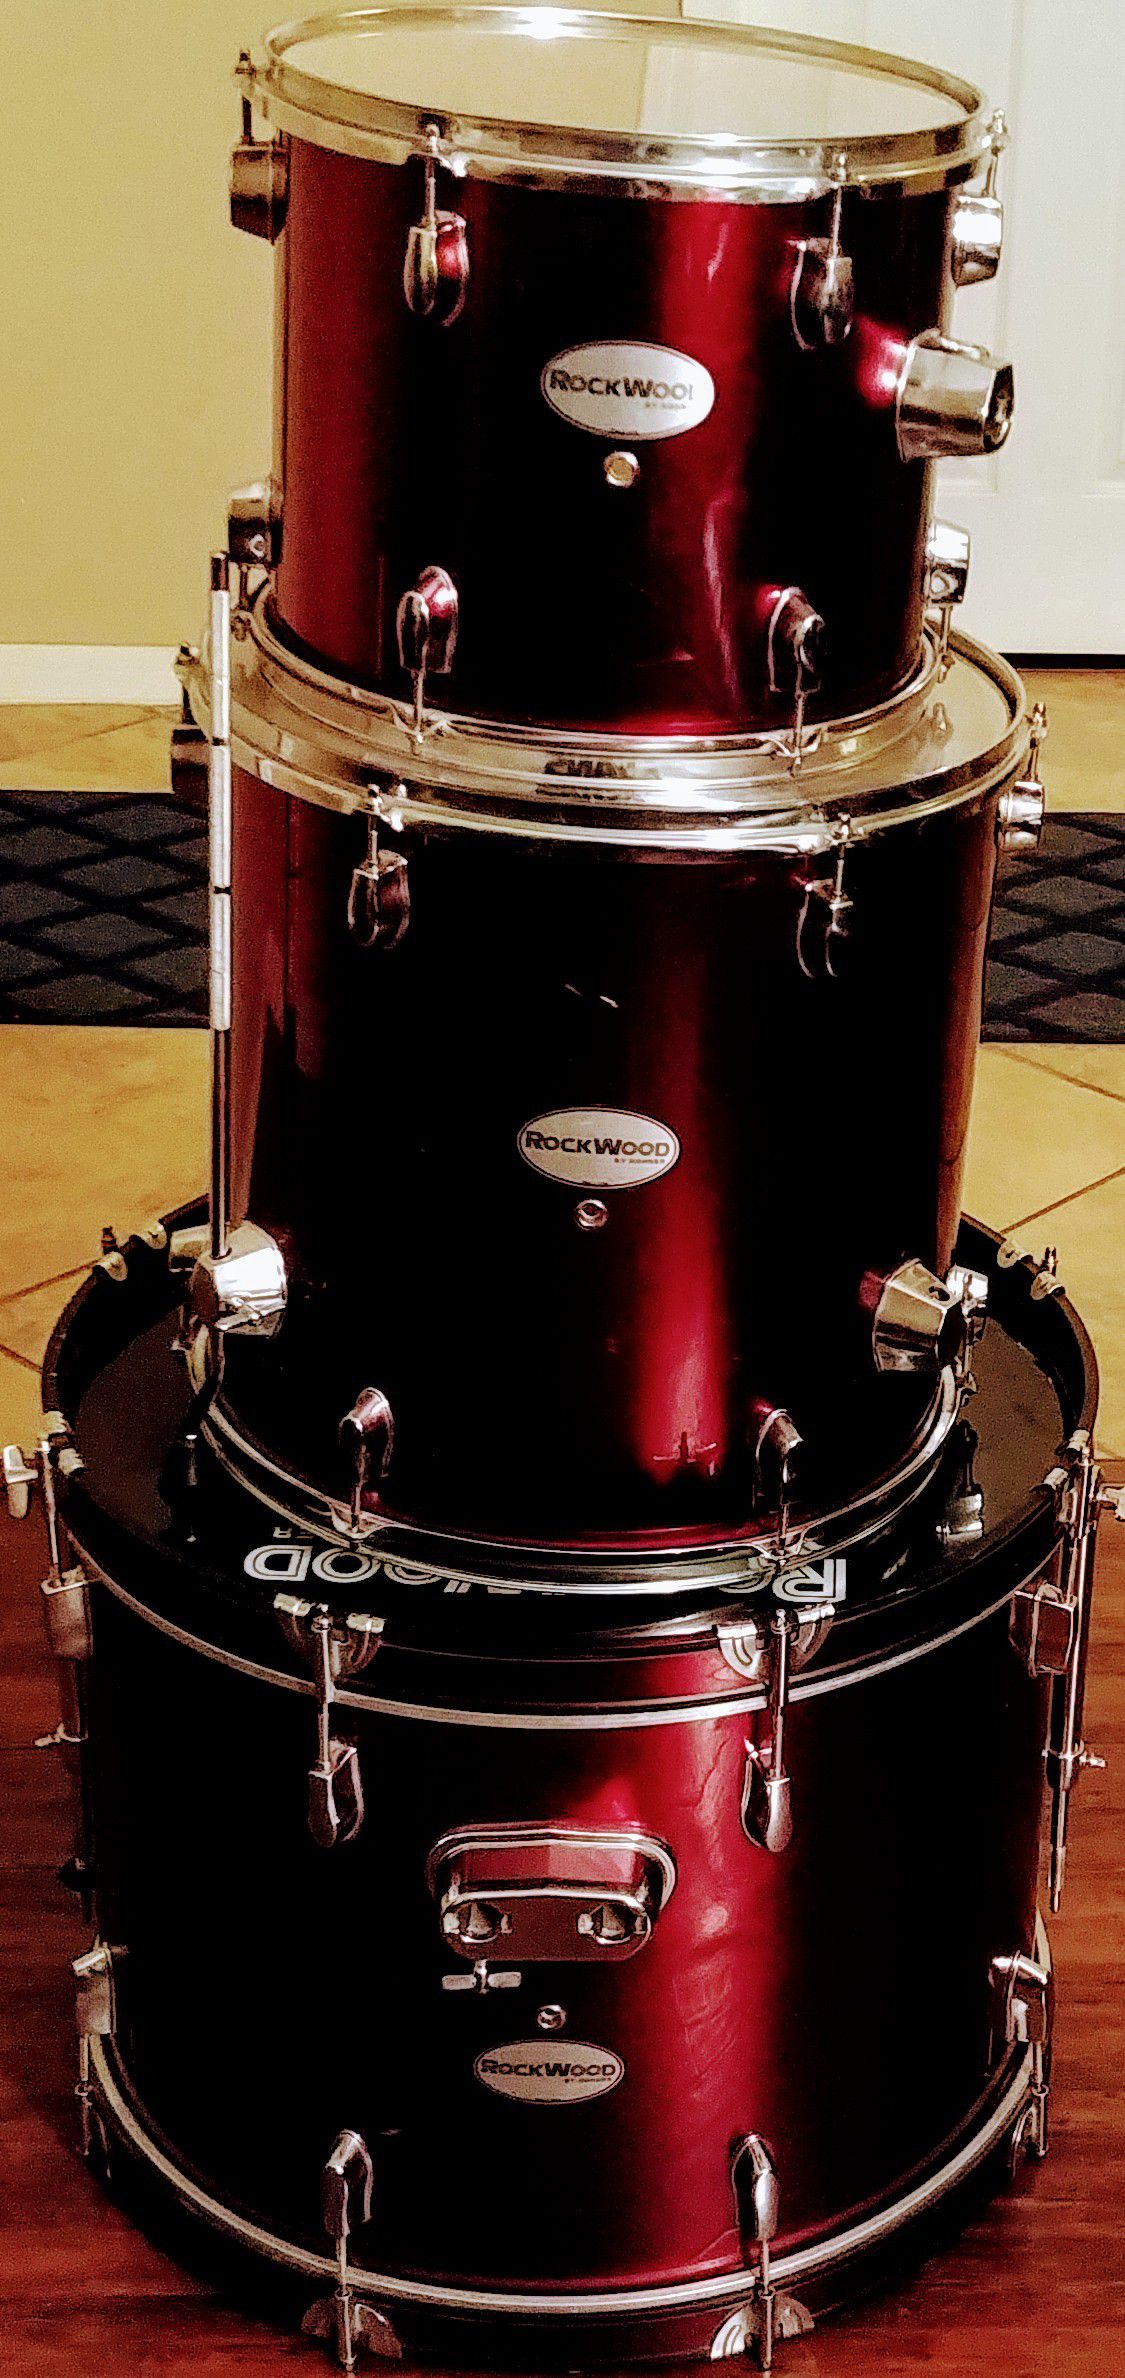 3 piece Rockwood Drum Set